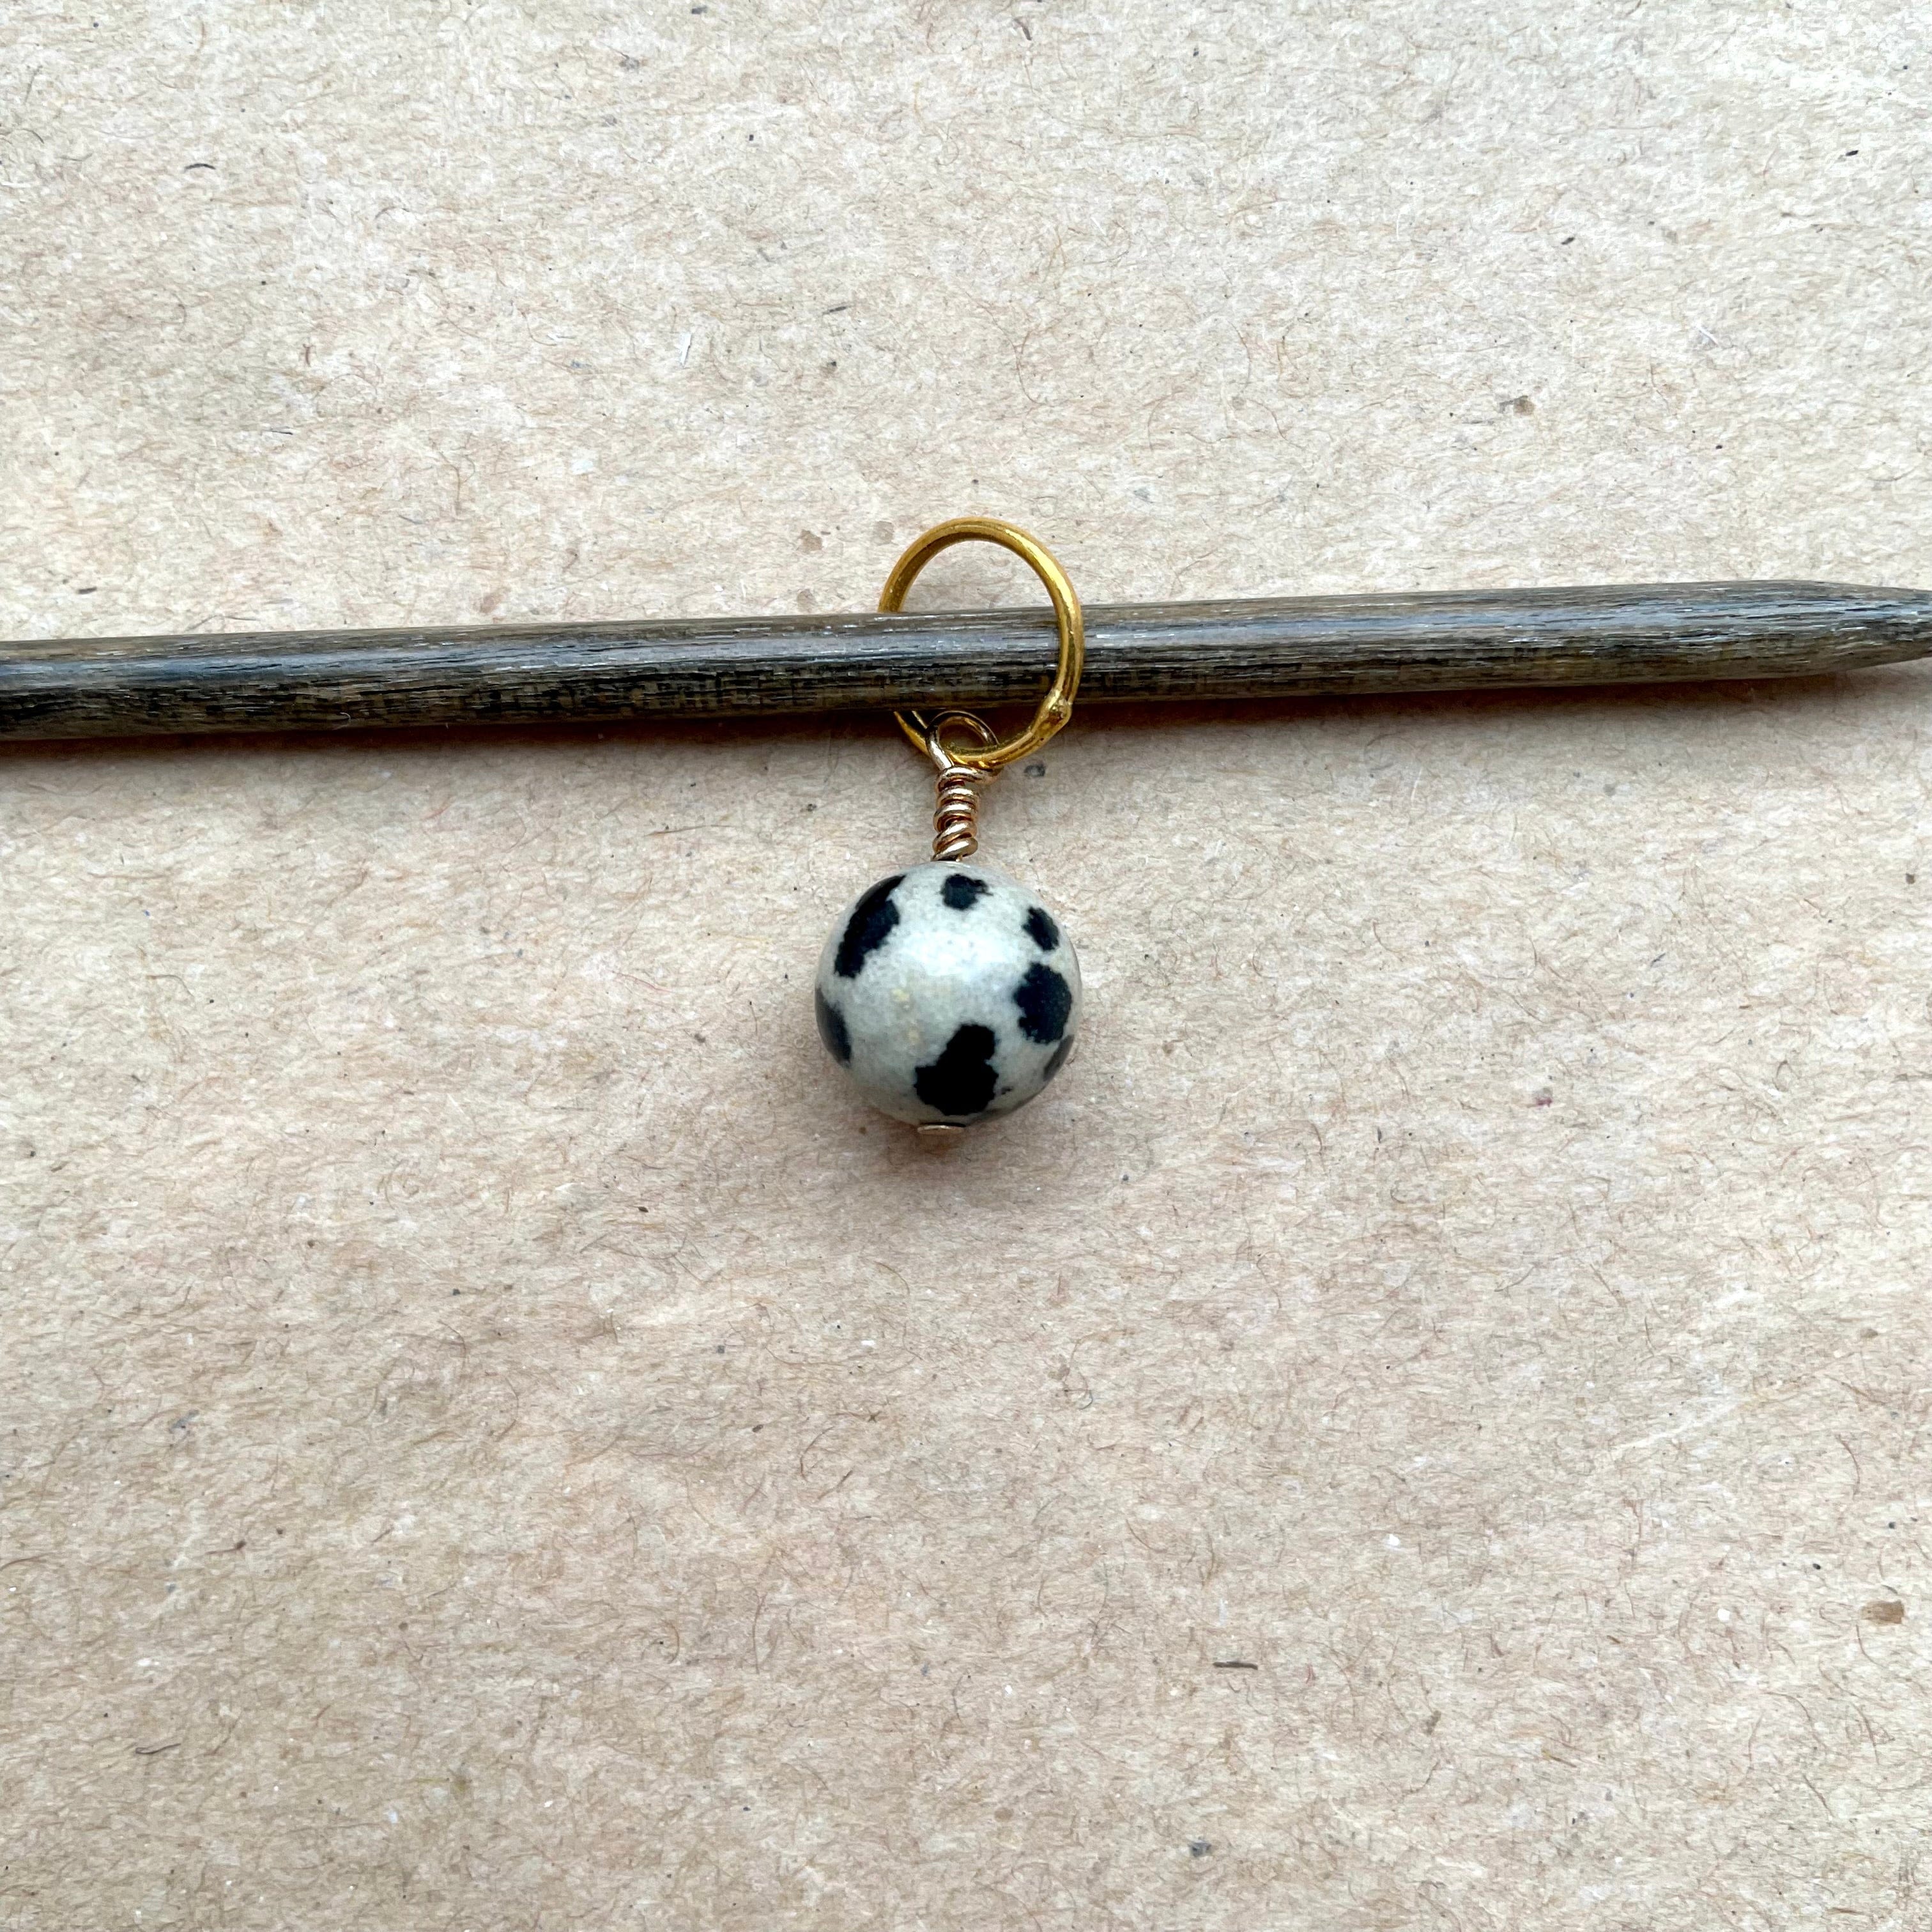 Dalmatian Jasper Round Bead Stitch Marker Set of 4